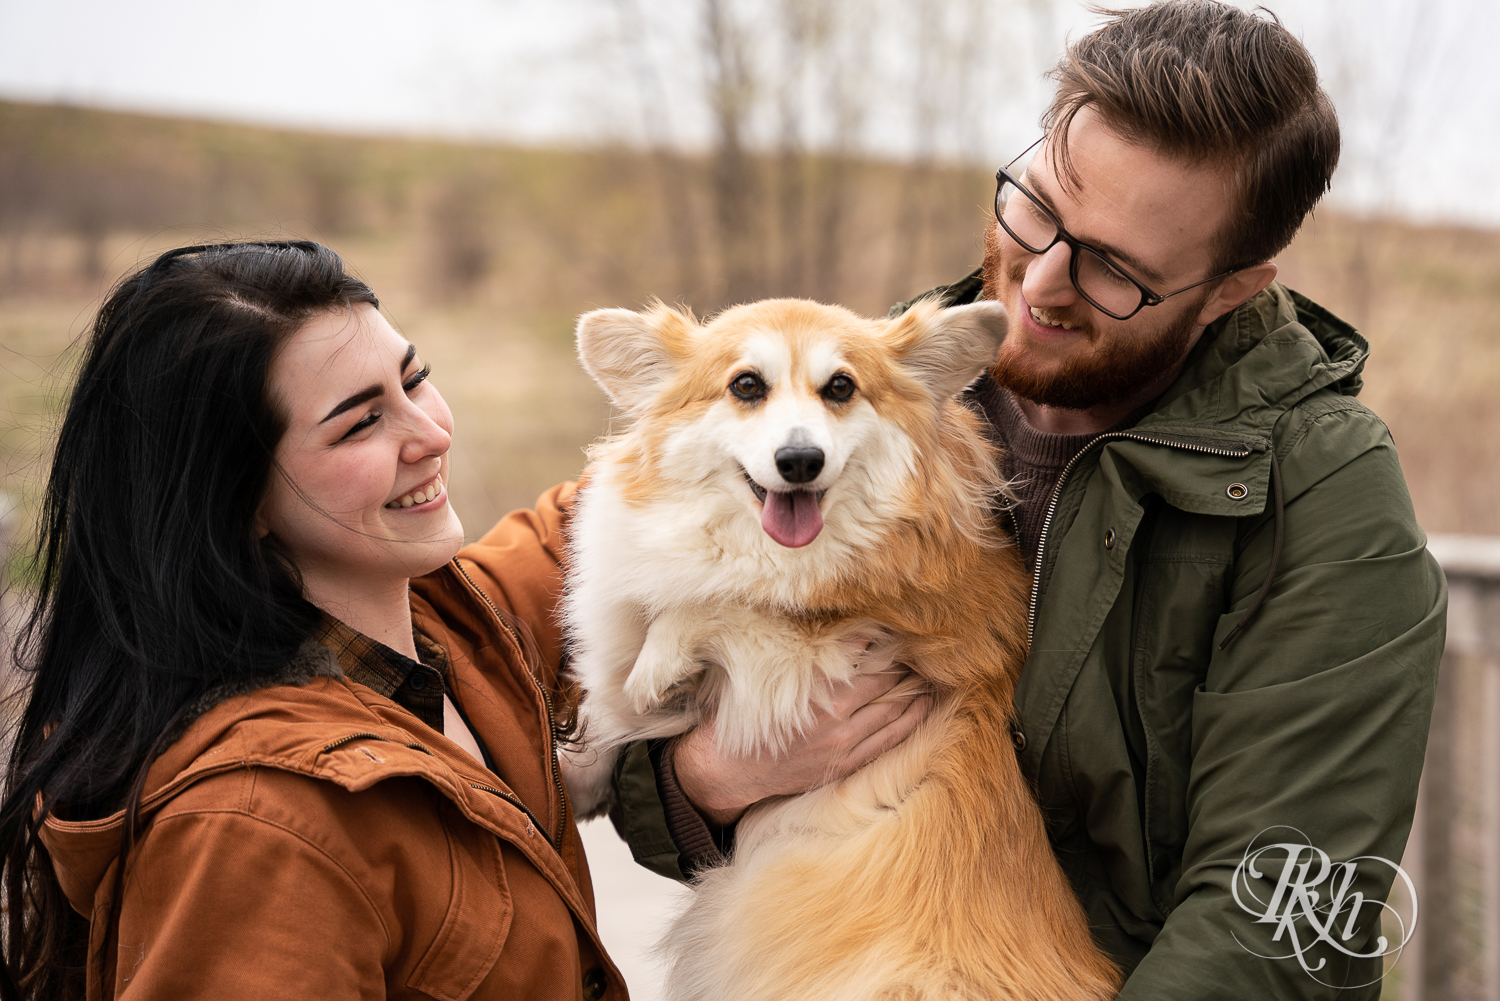 Man and woman in jackets hold Corgi dog at Lebanon Hills Regional Park in Eagan, Minnesota. 